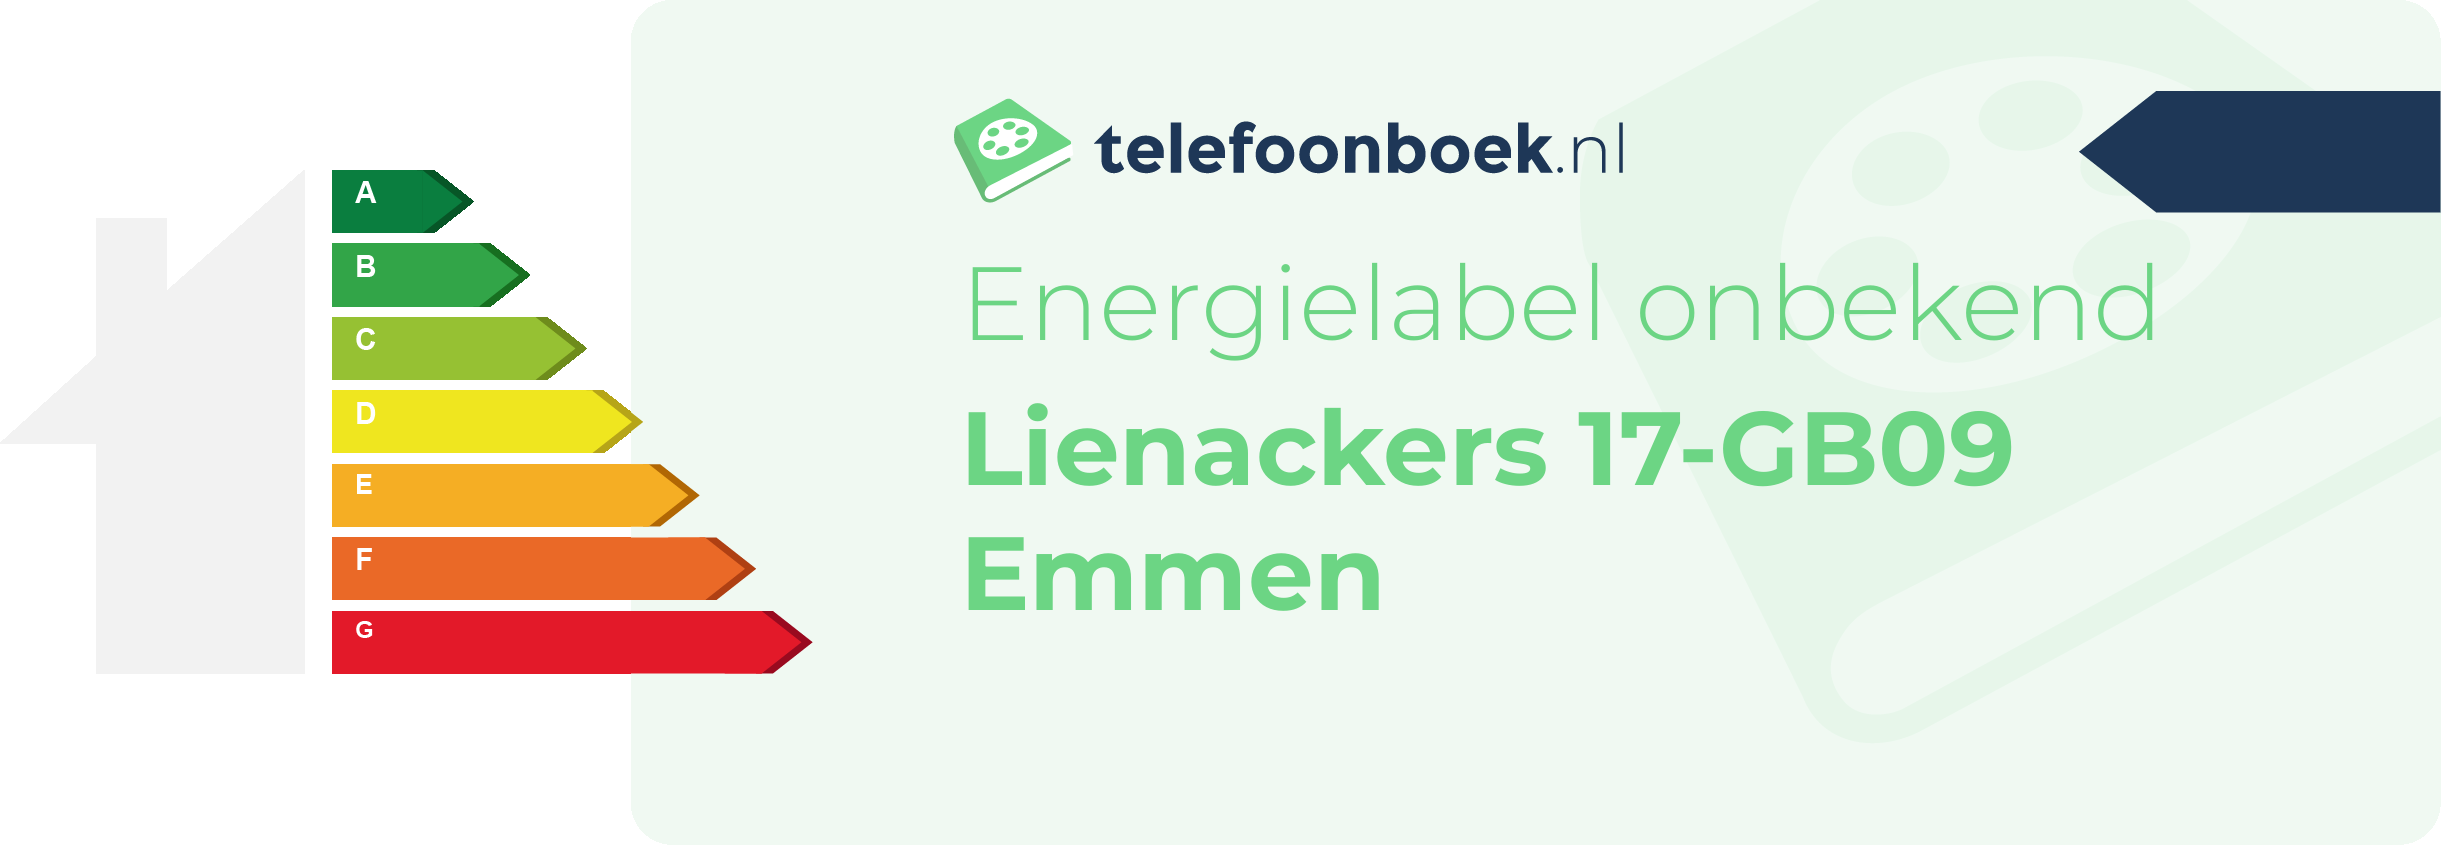 Energielabel Lienackers 17-GB09 Emmen